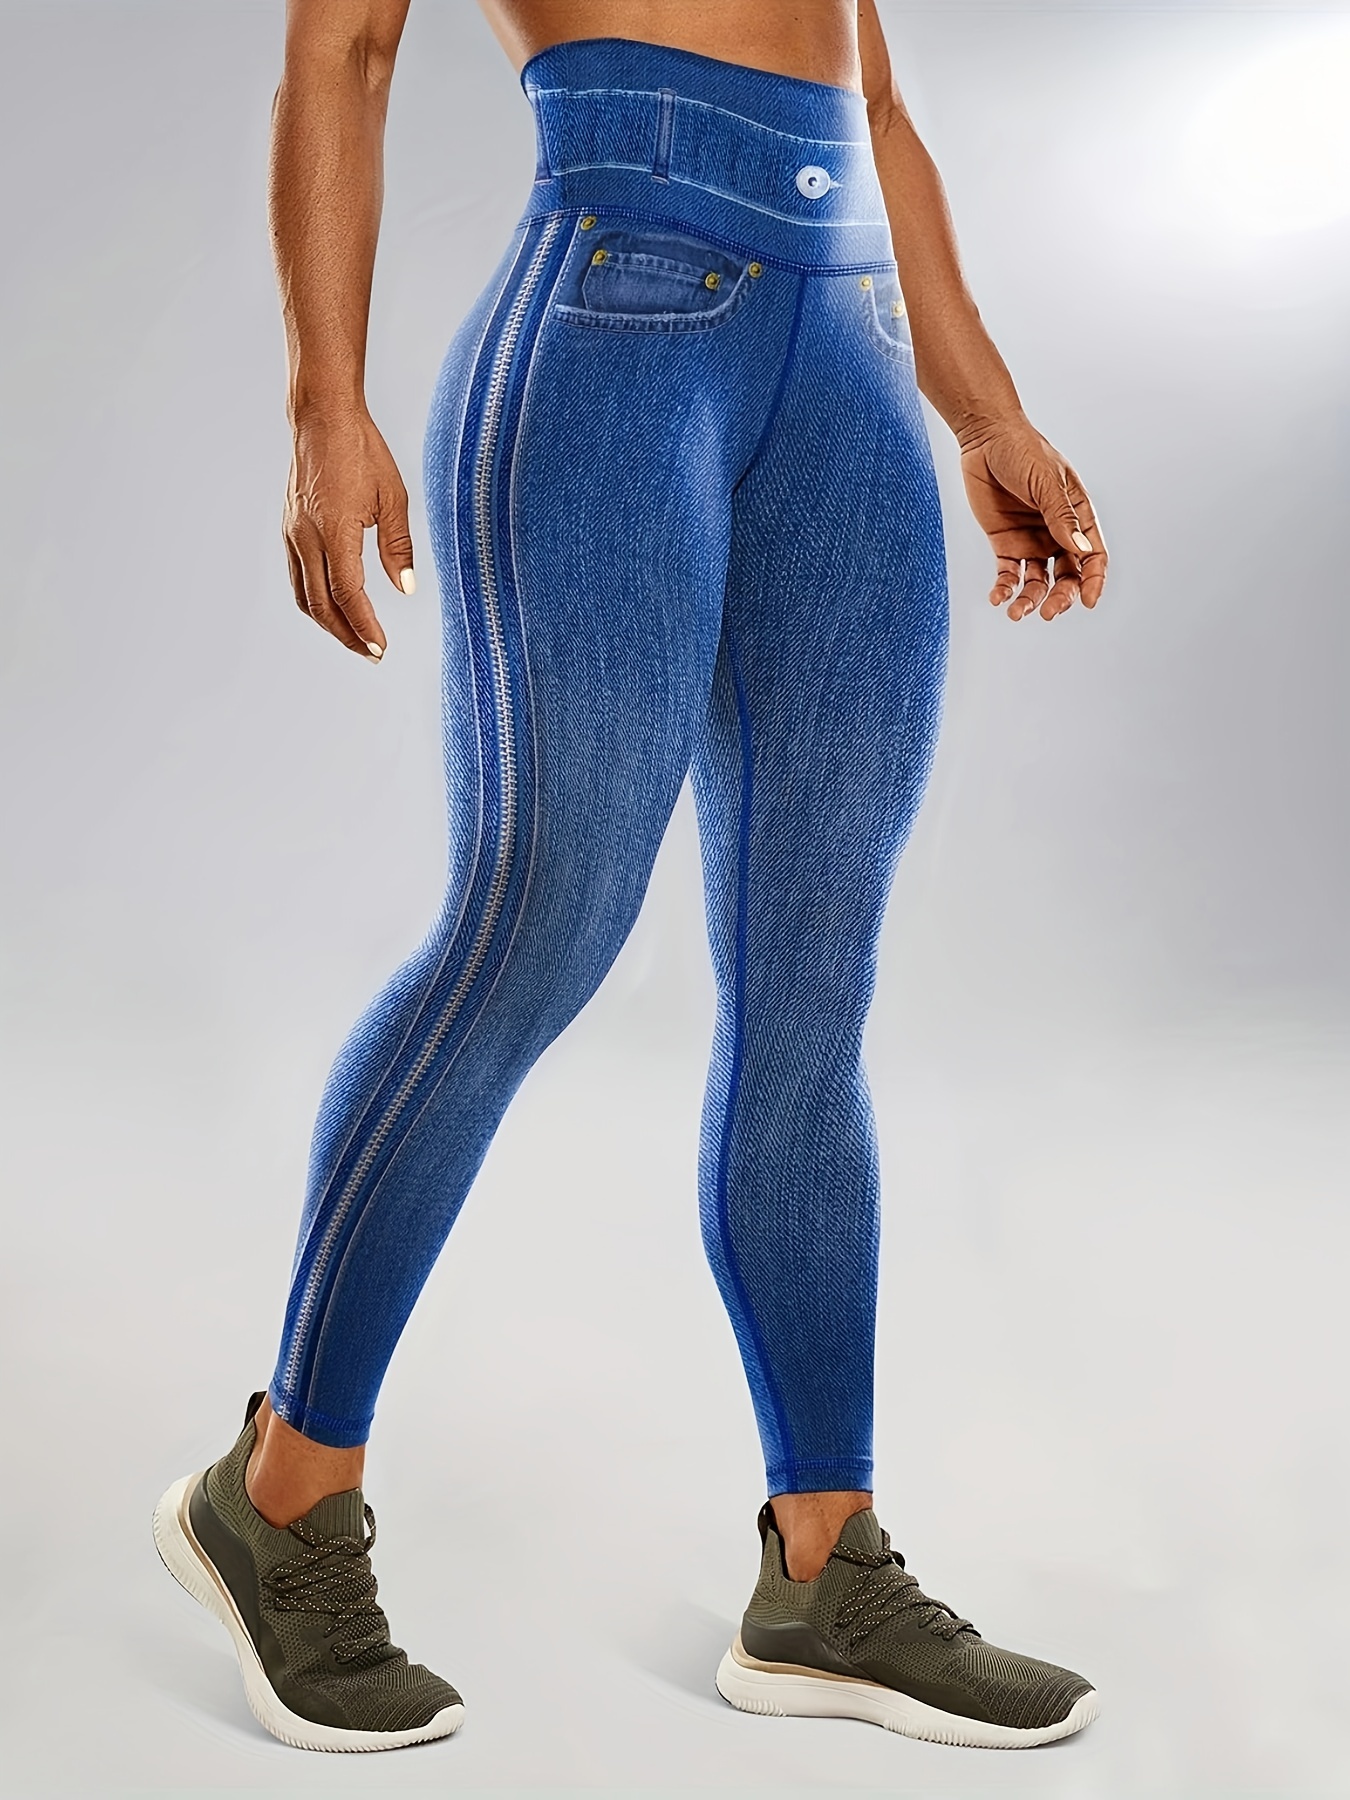 Faux Denim Jeans Print Yoga Sports Leggings With Faux Zipper Decor